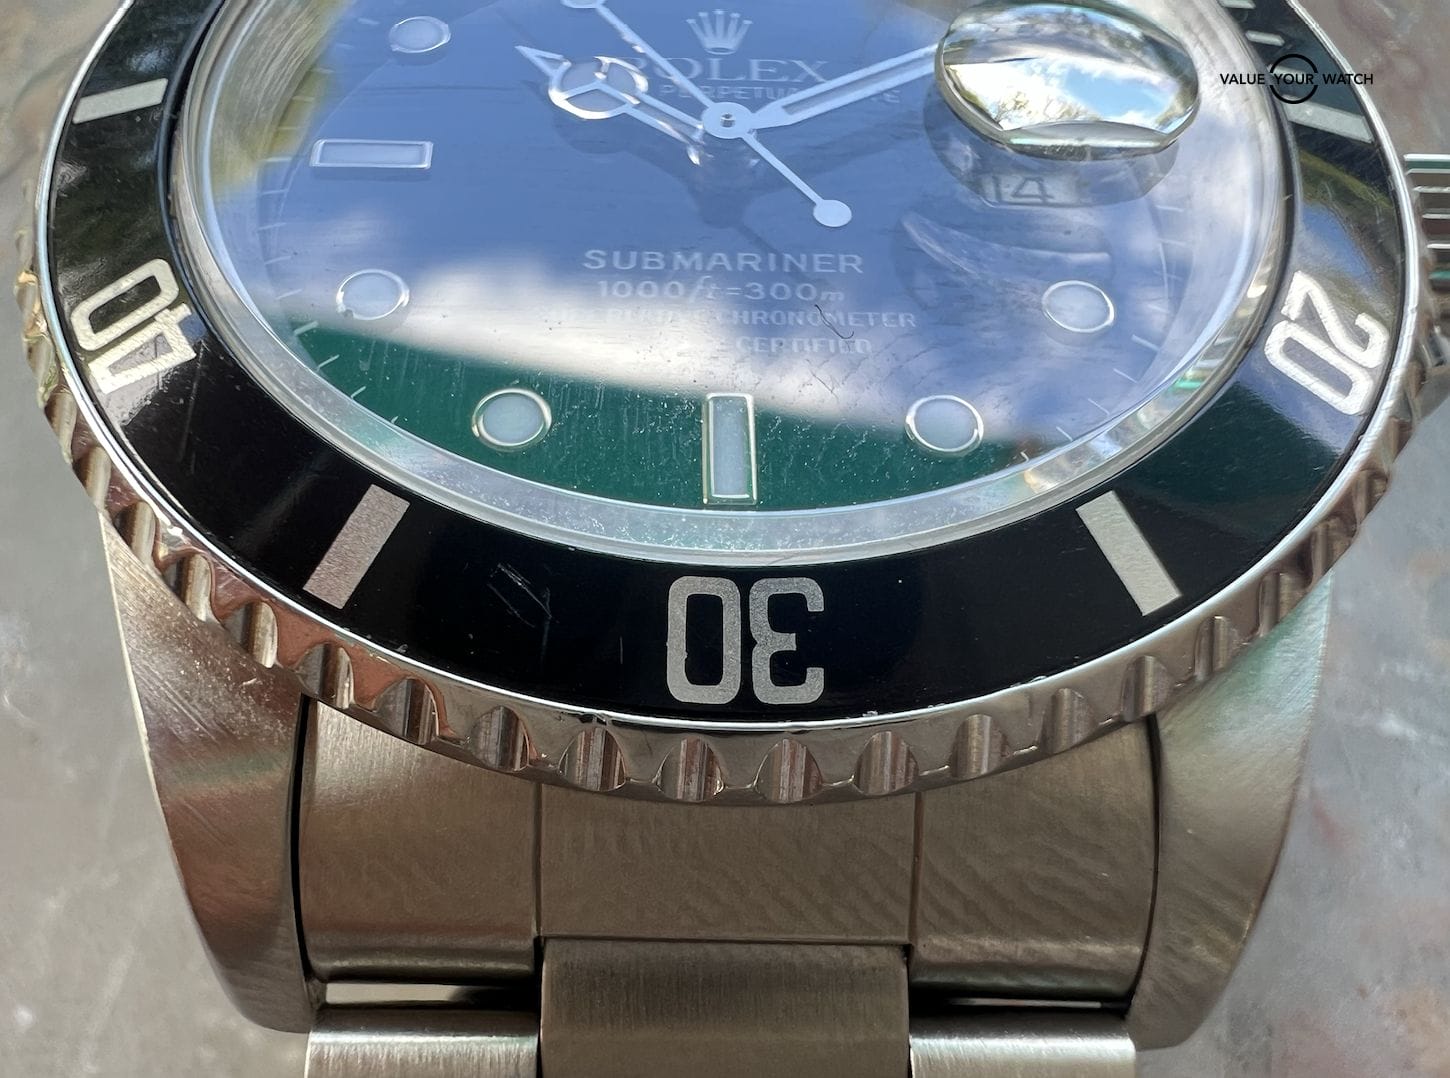 Rolex Men's Submariner Green Dial Watch